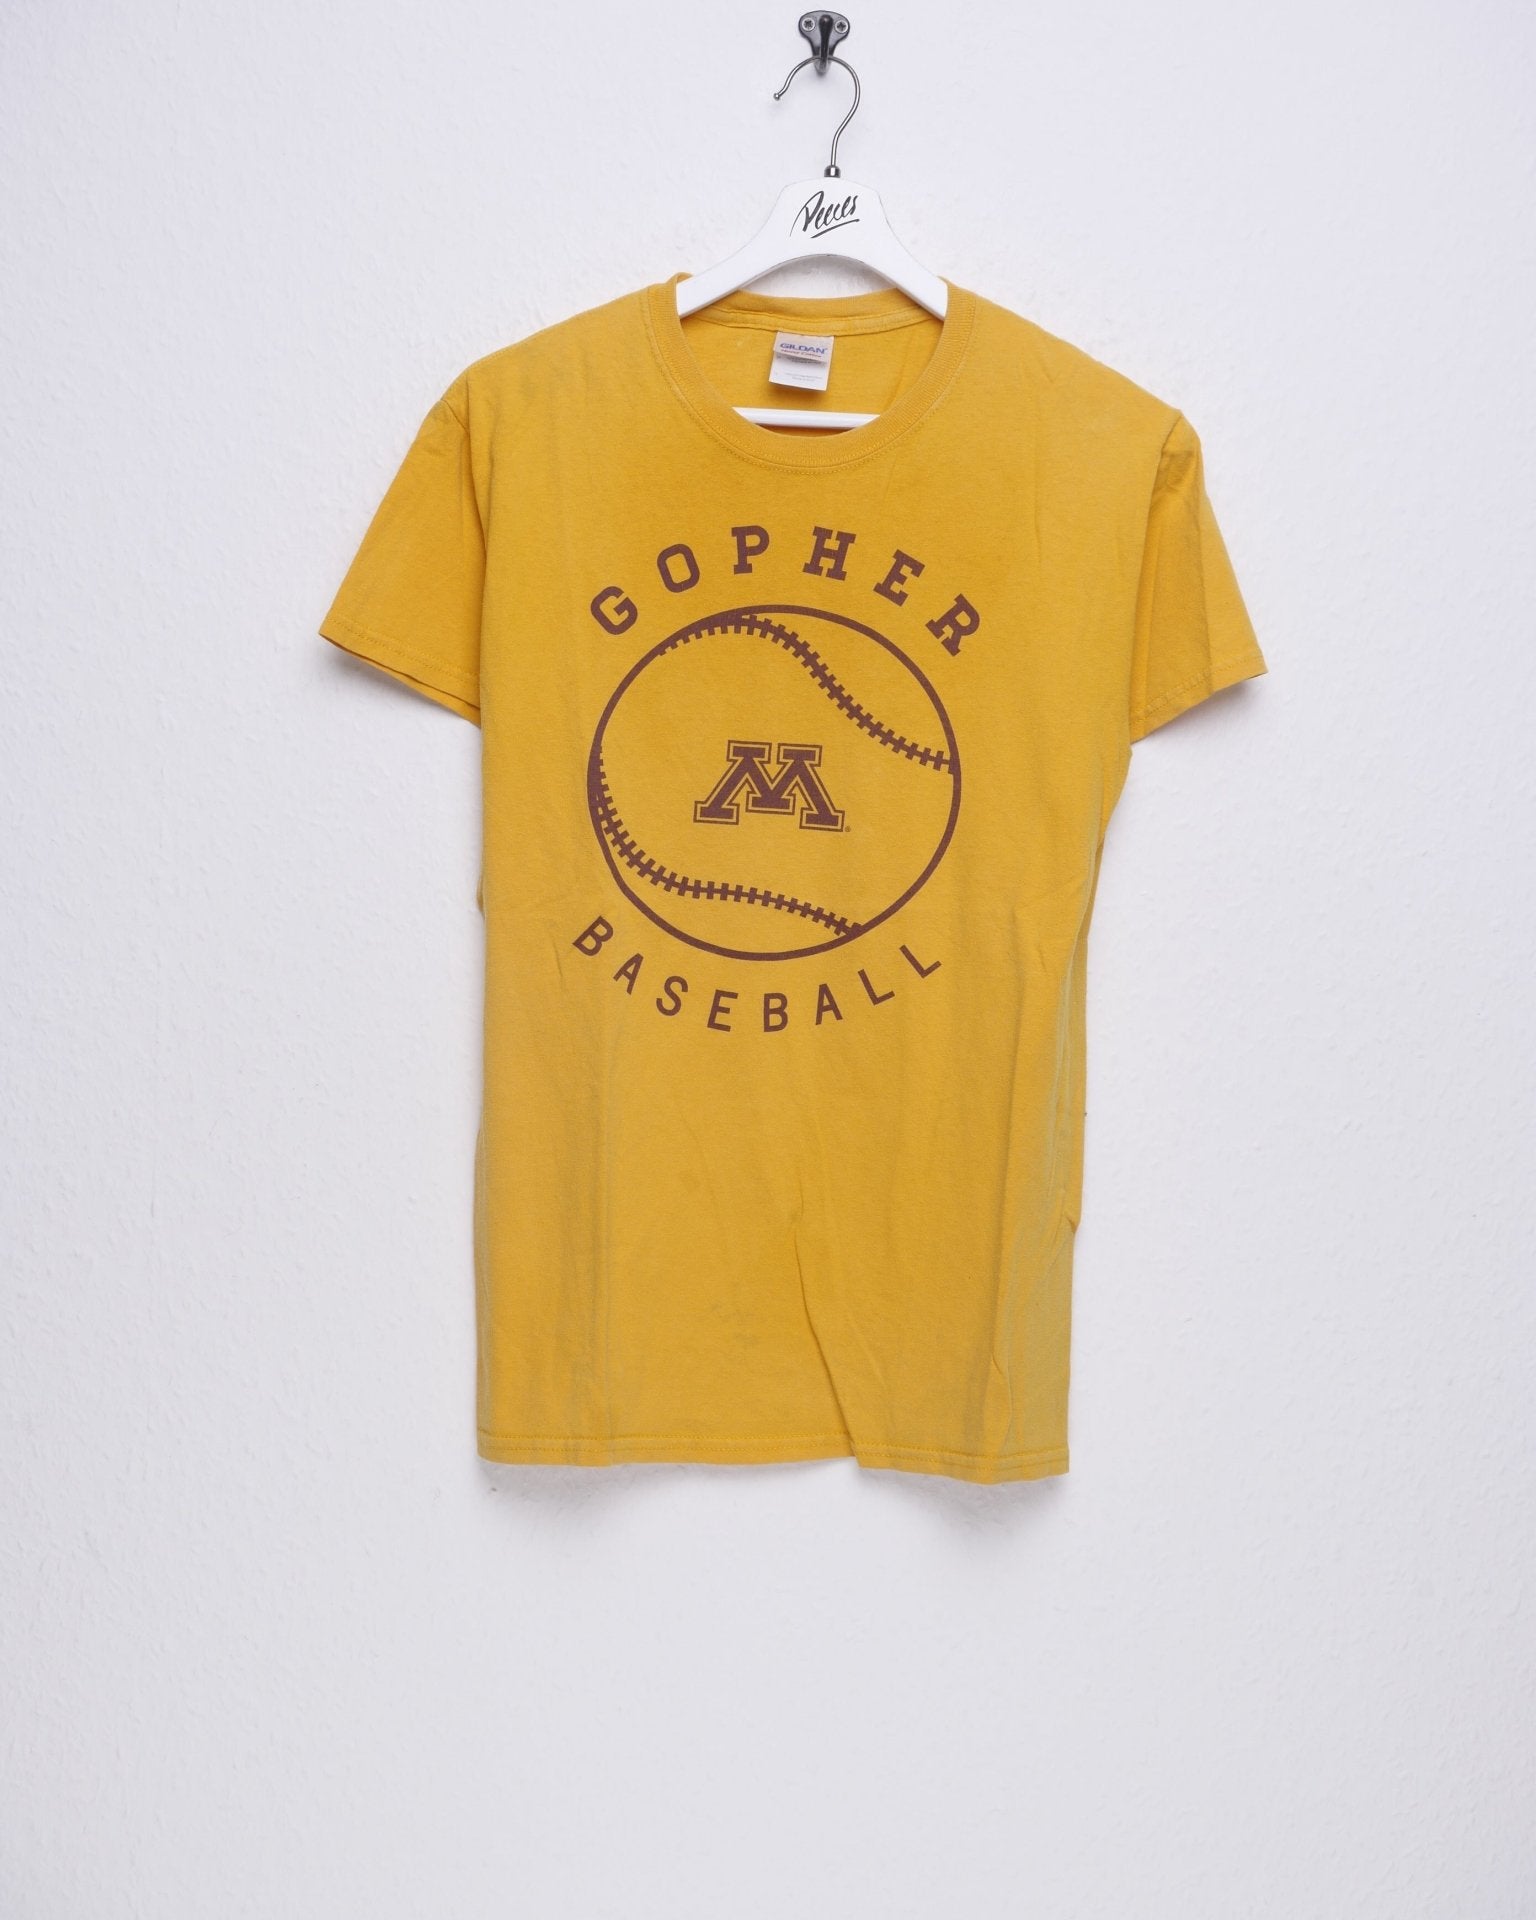 Gopher Baseball printed Graphic Vintage Shirt - Peeces